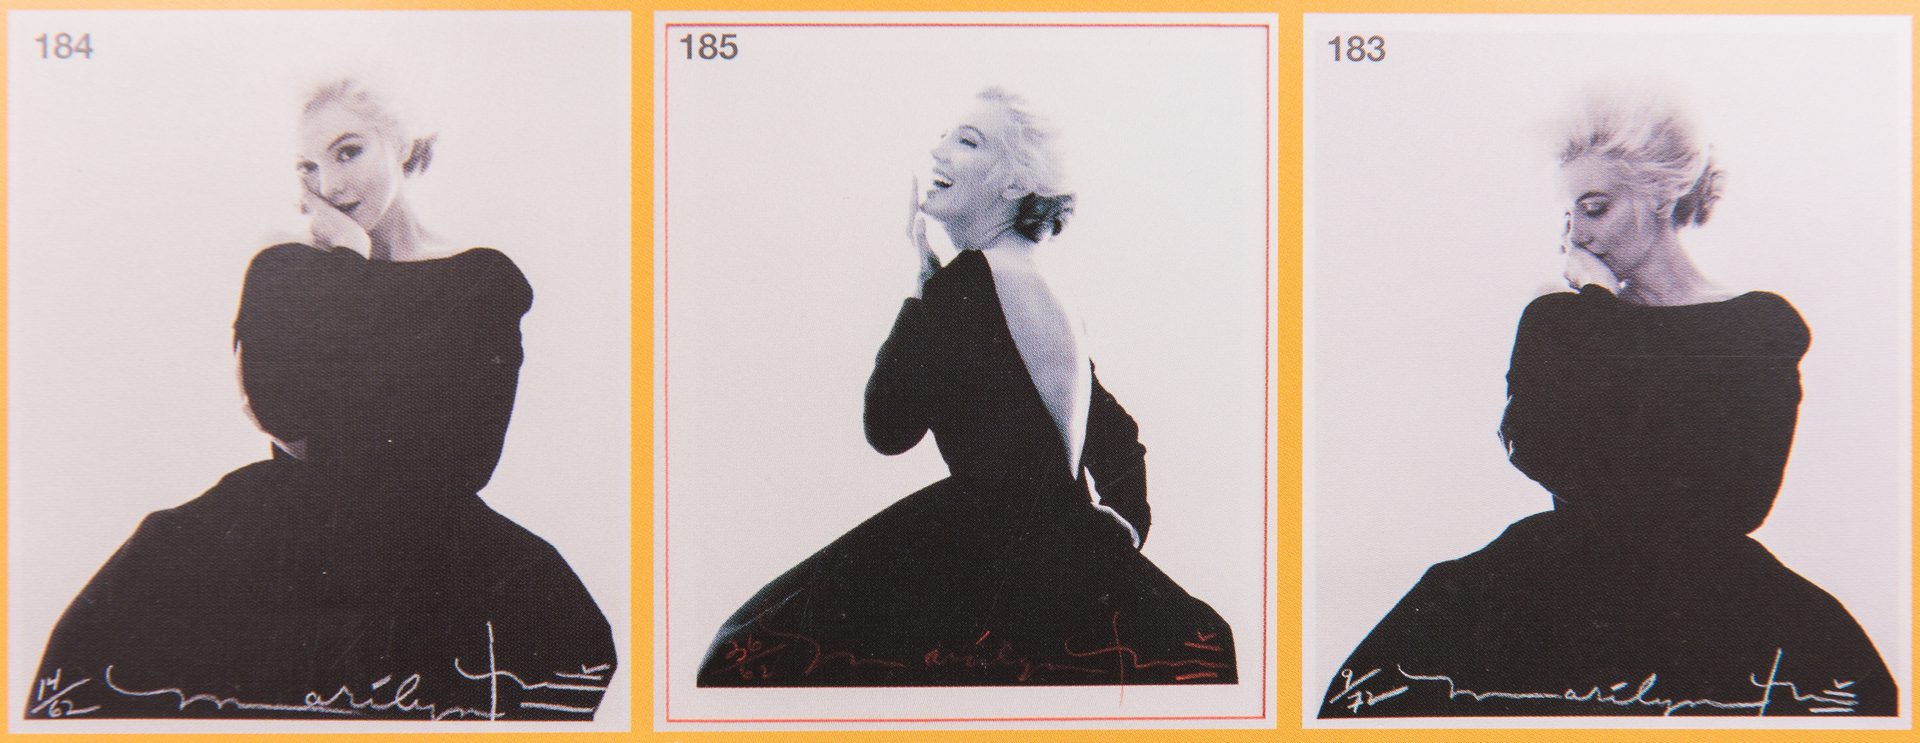 Lot 551: Bert Stern Marilyn Monroe Last Sitting signed photograph plus 2 Books